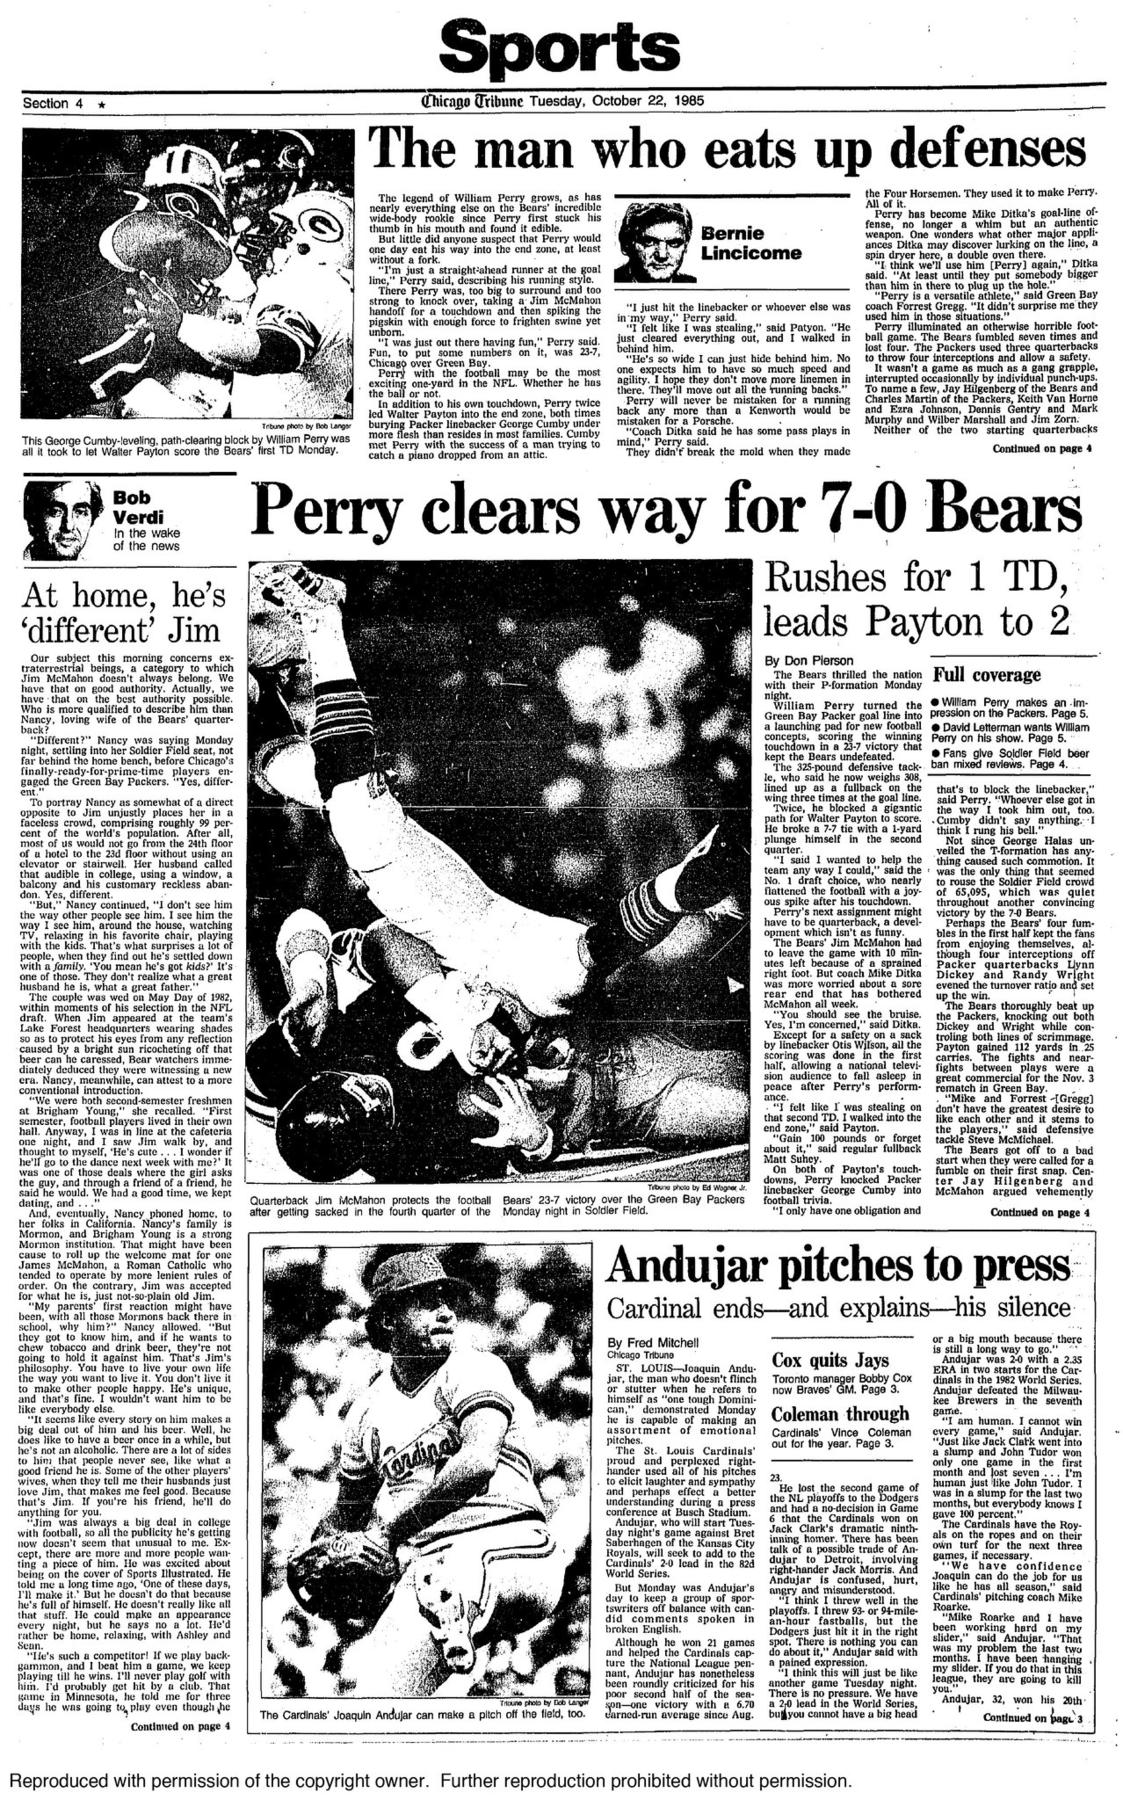 Oct. 21, 1985: William Perry's first touchdown run